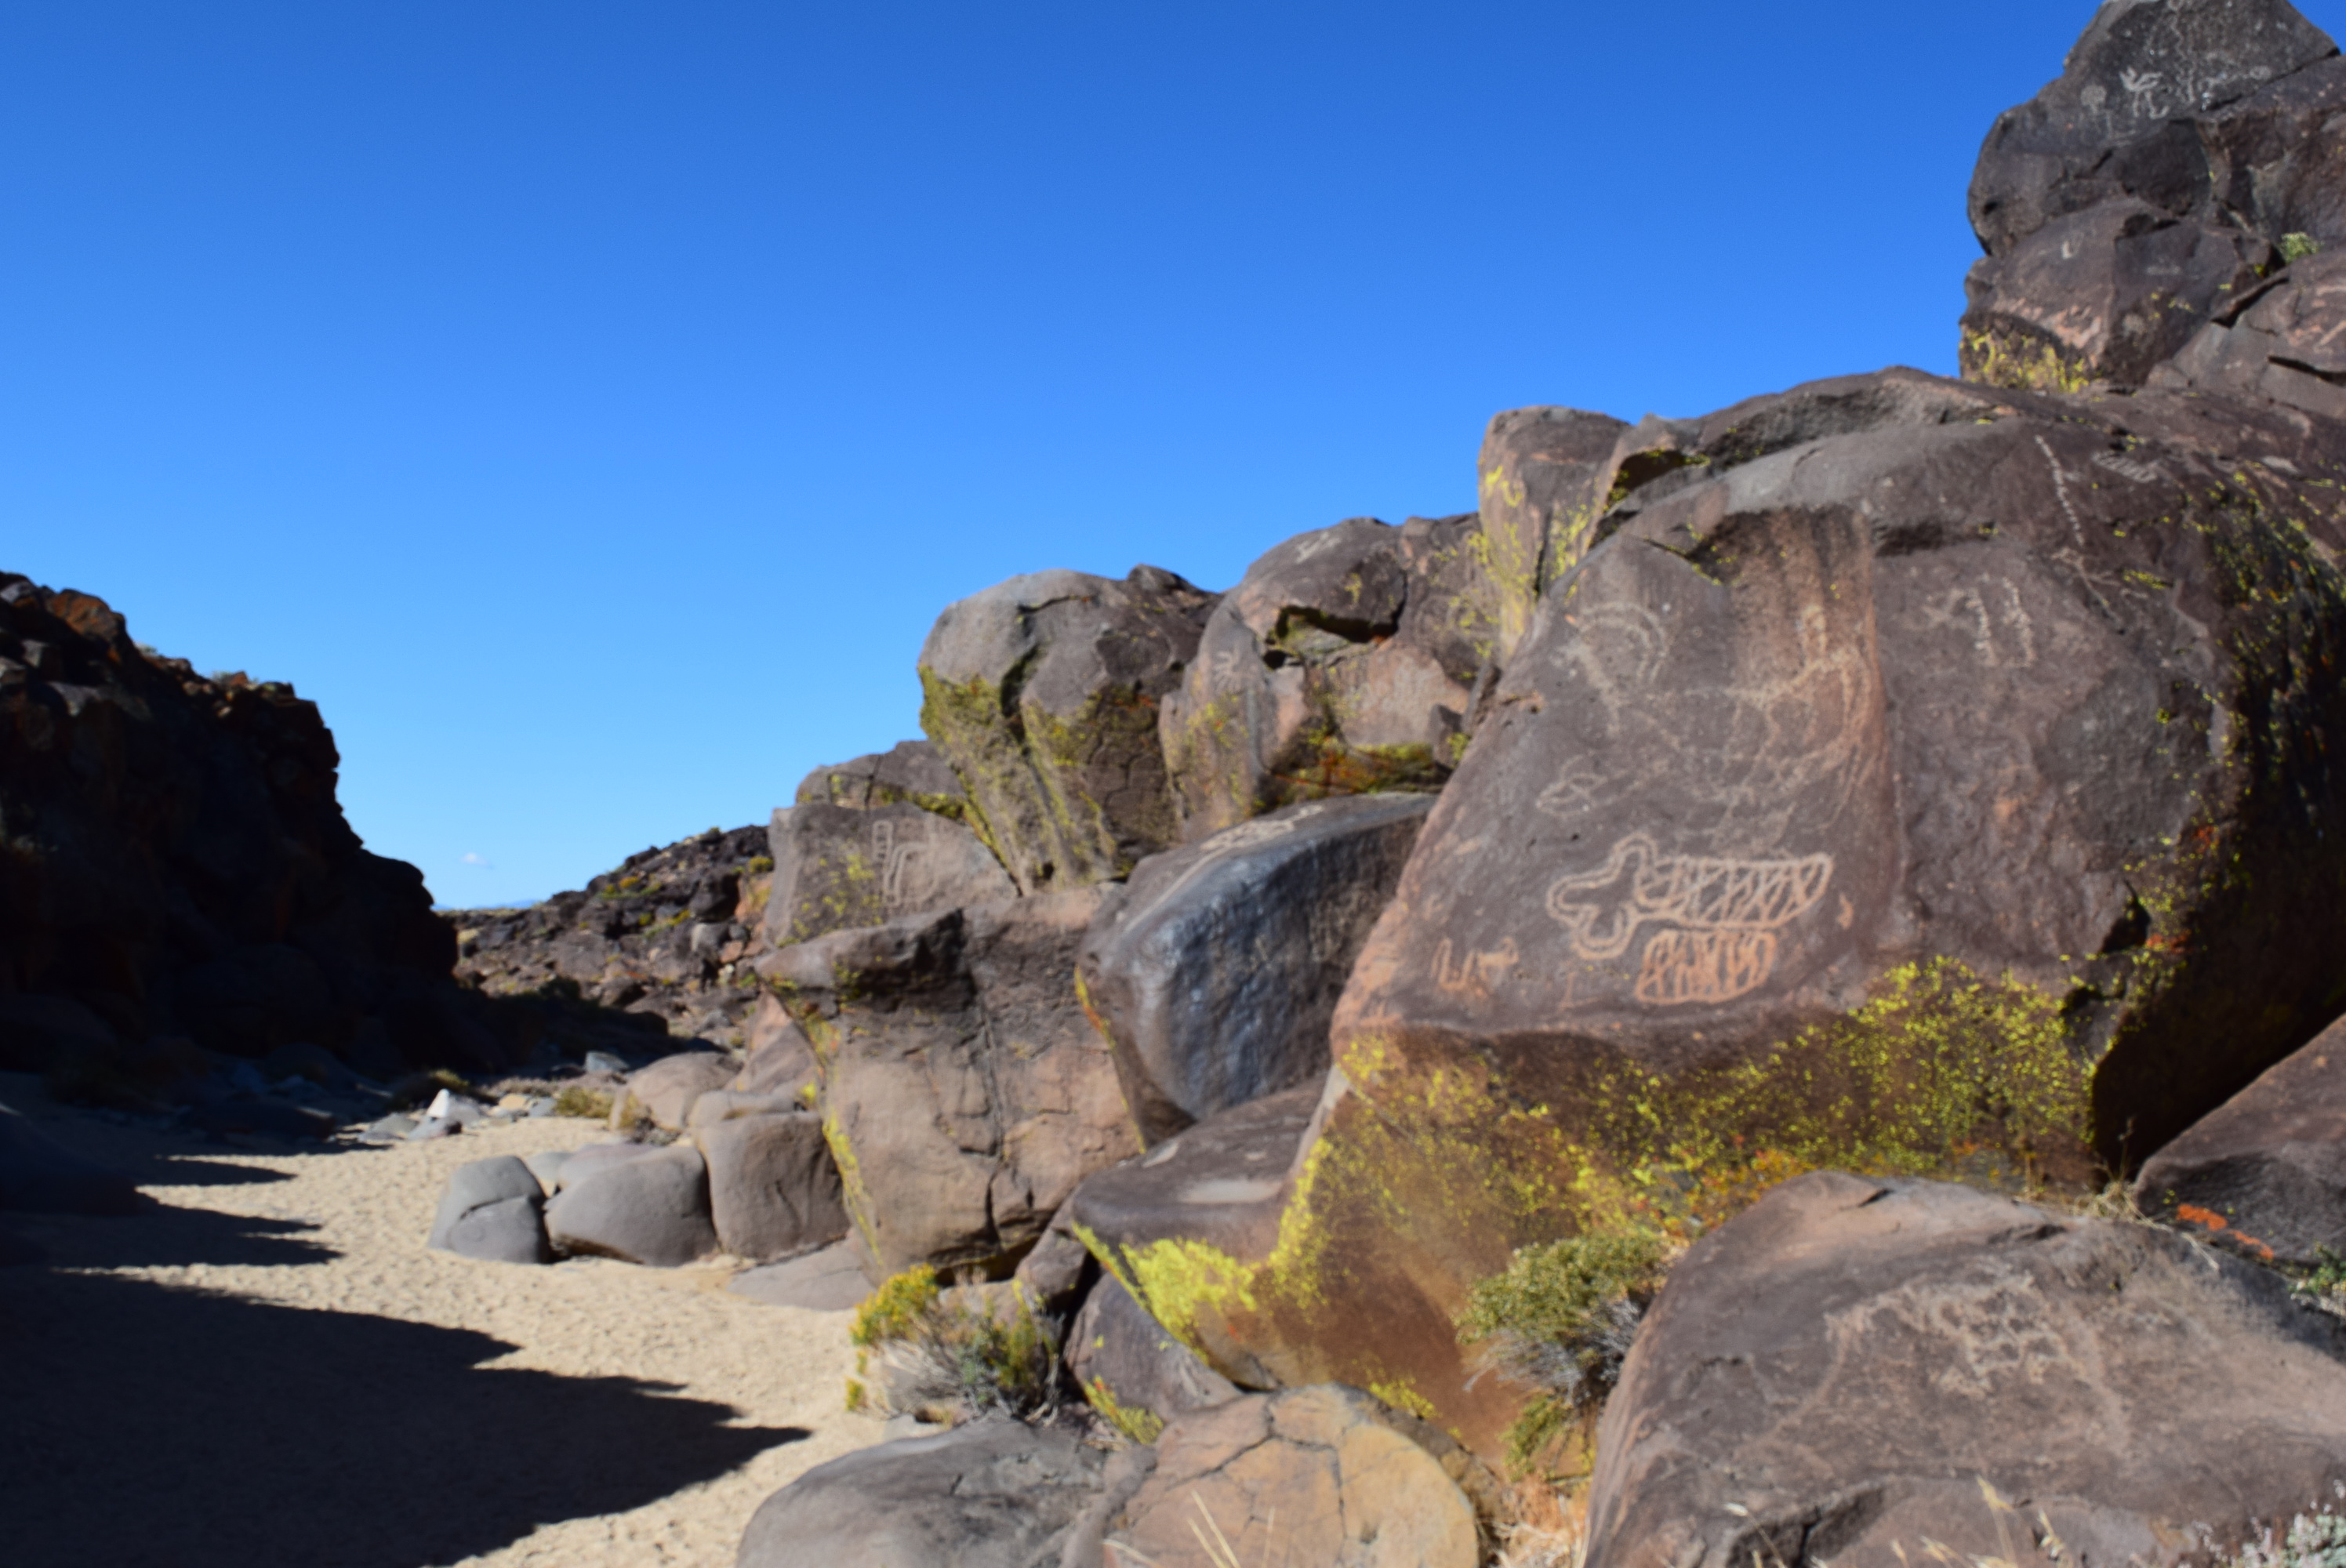 Rockin’ Rock Art: Mojave Desert Petroglyphs Are Worth a Visit